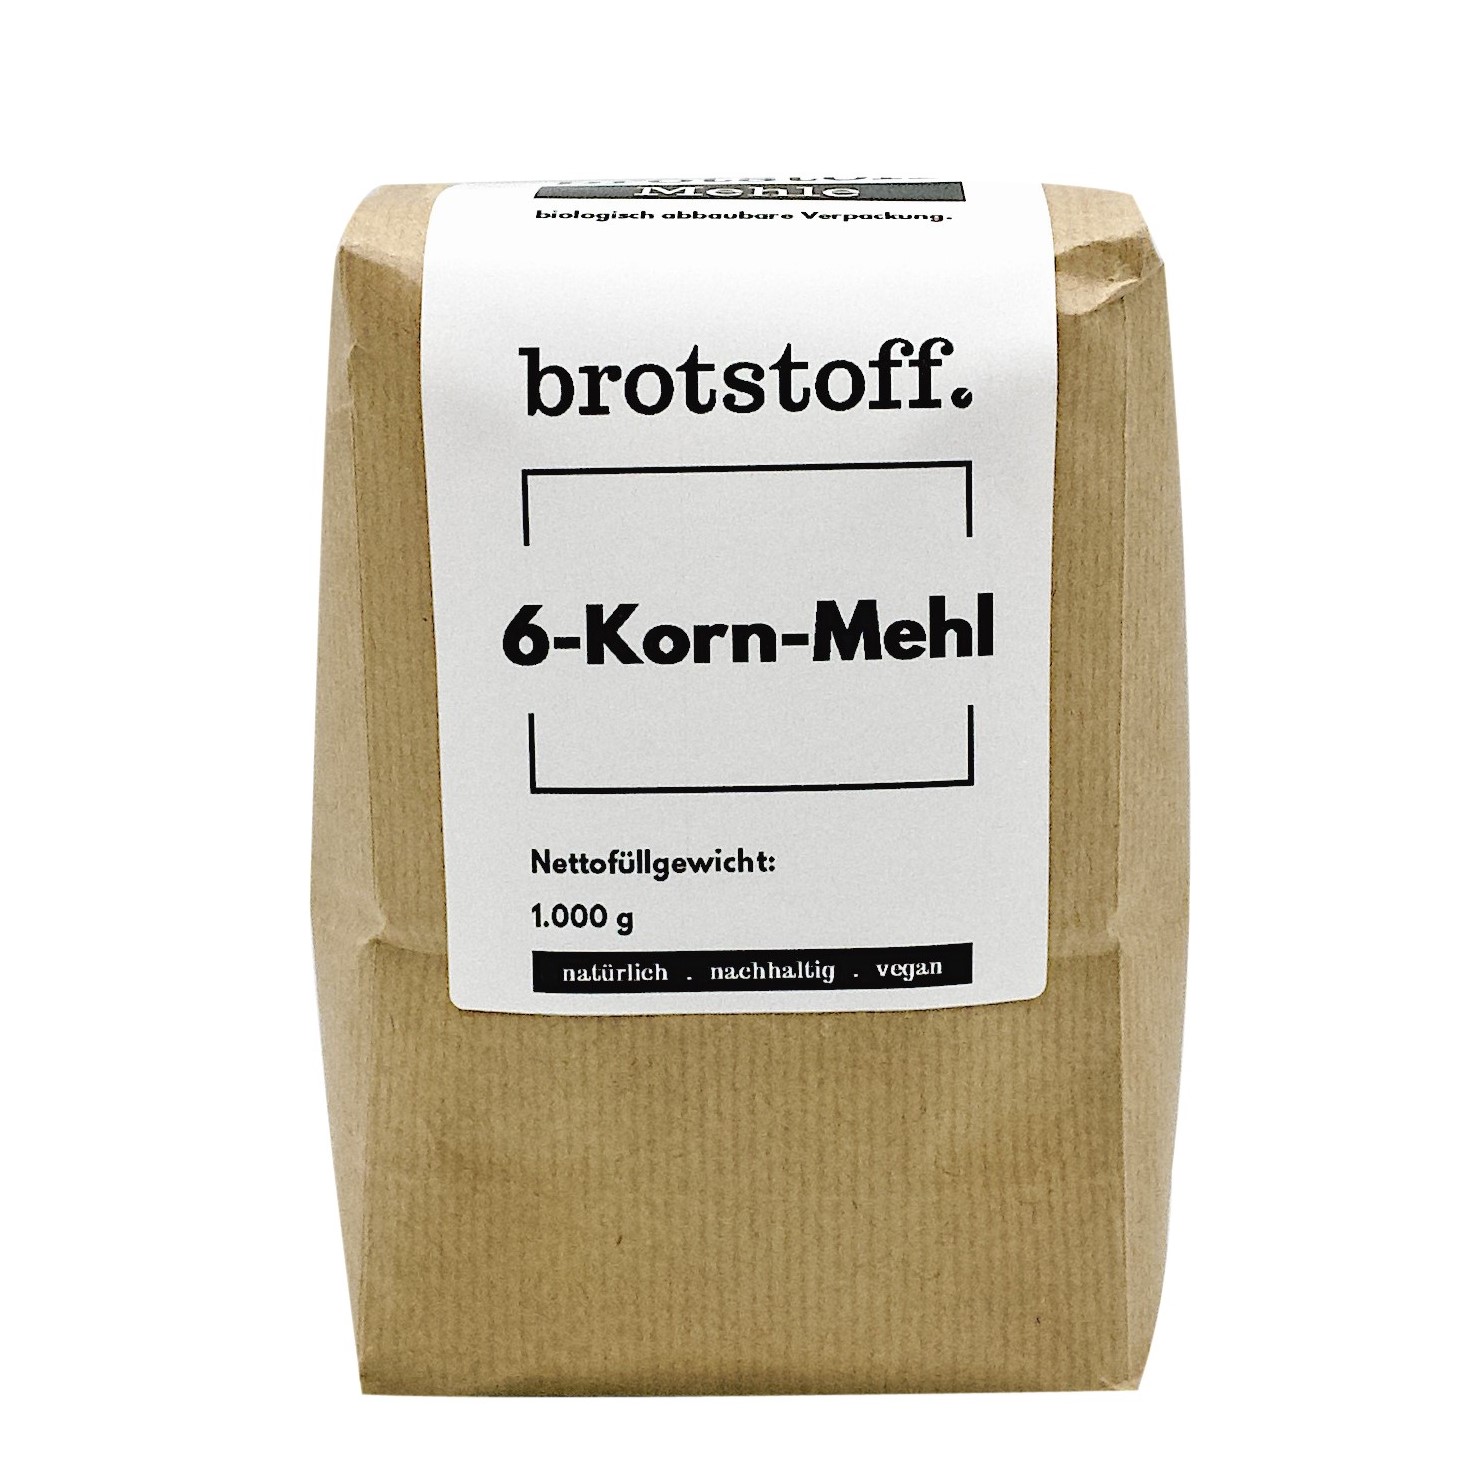 6-Korn-Mehl | brotstoff.